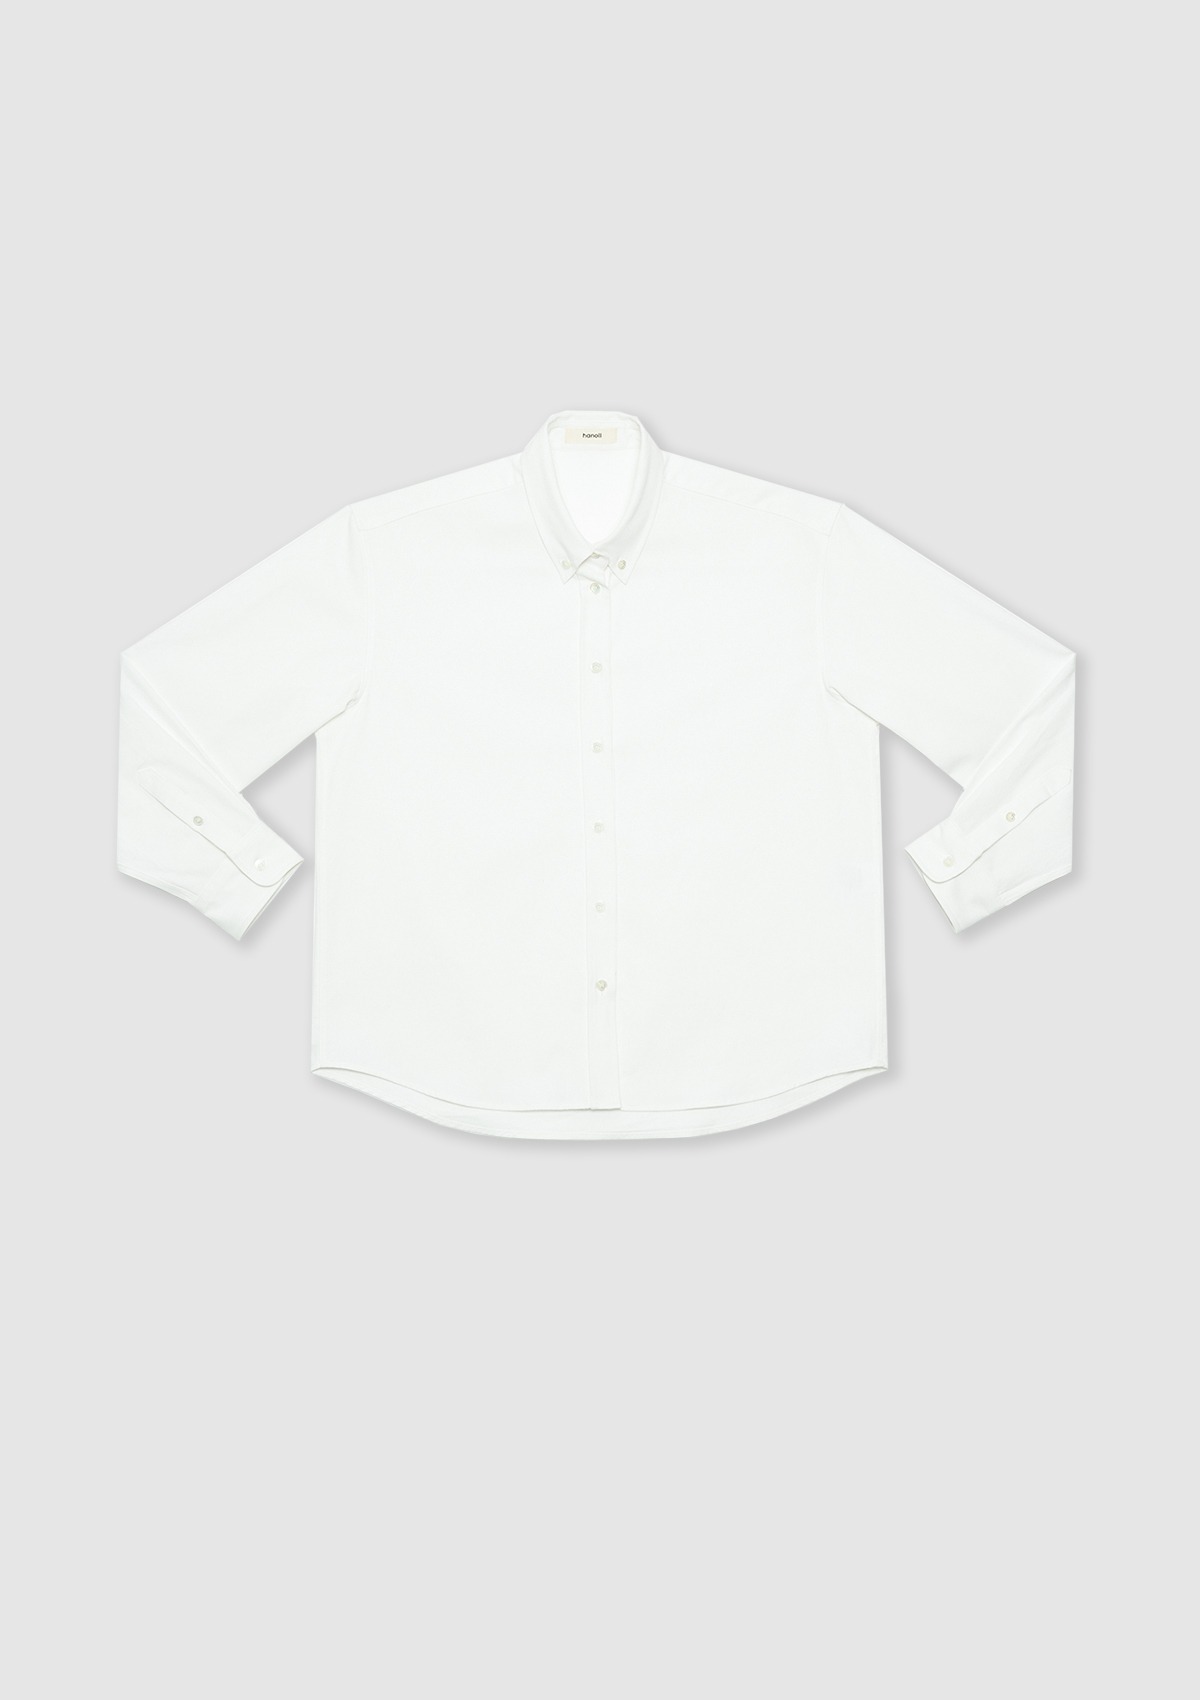 Down Shirt (White)